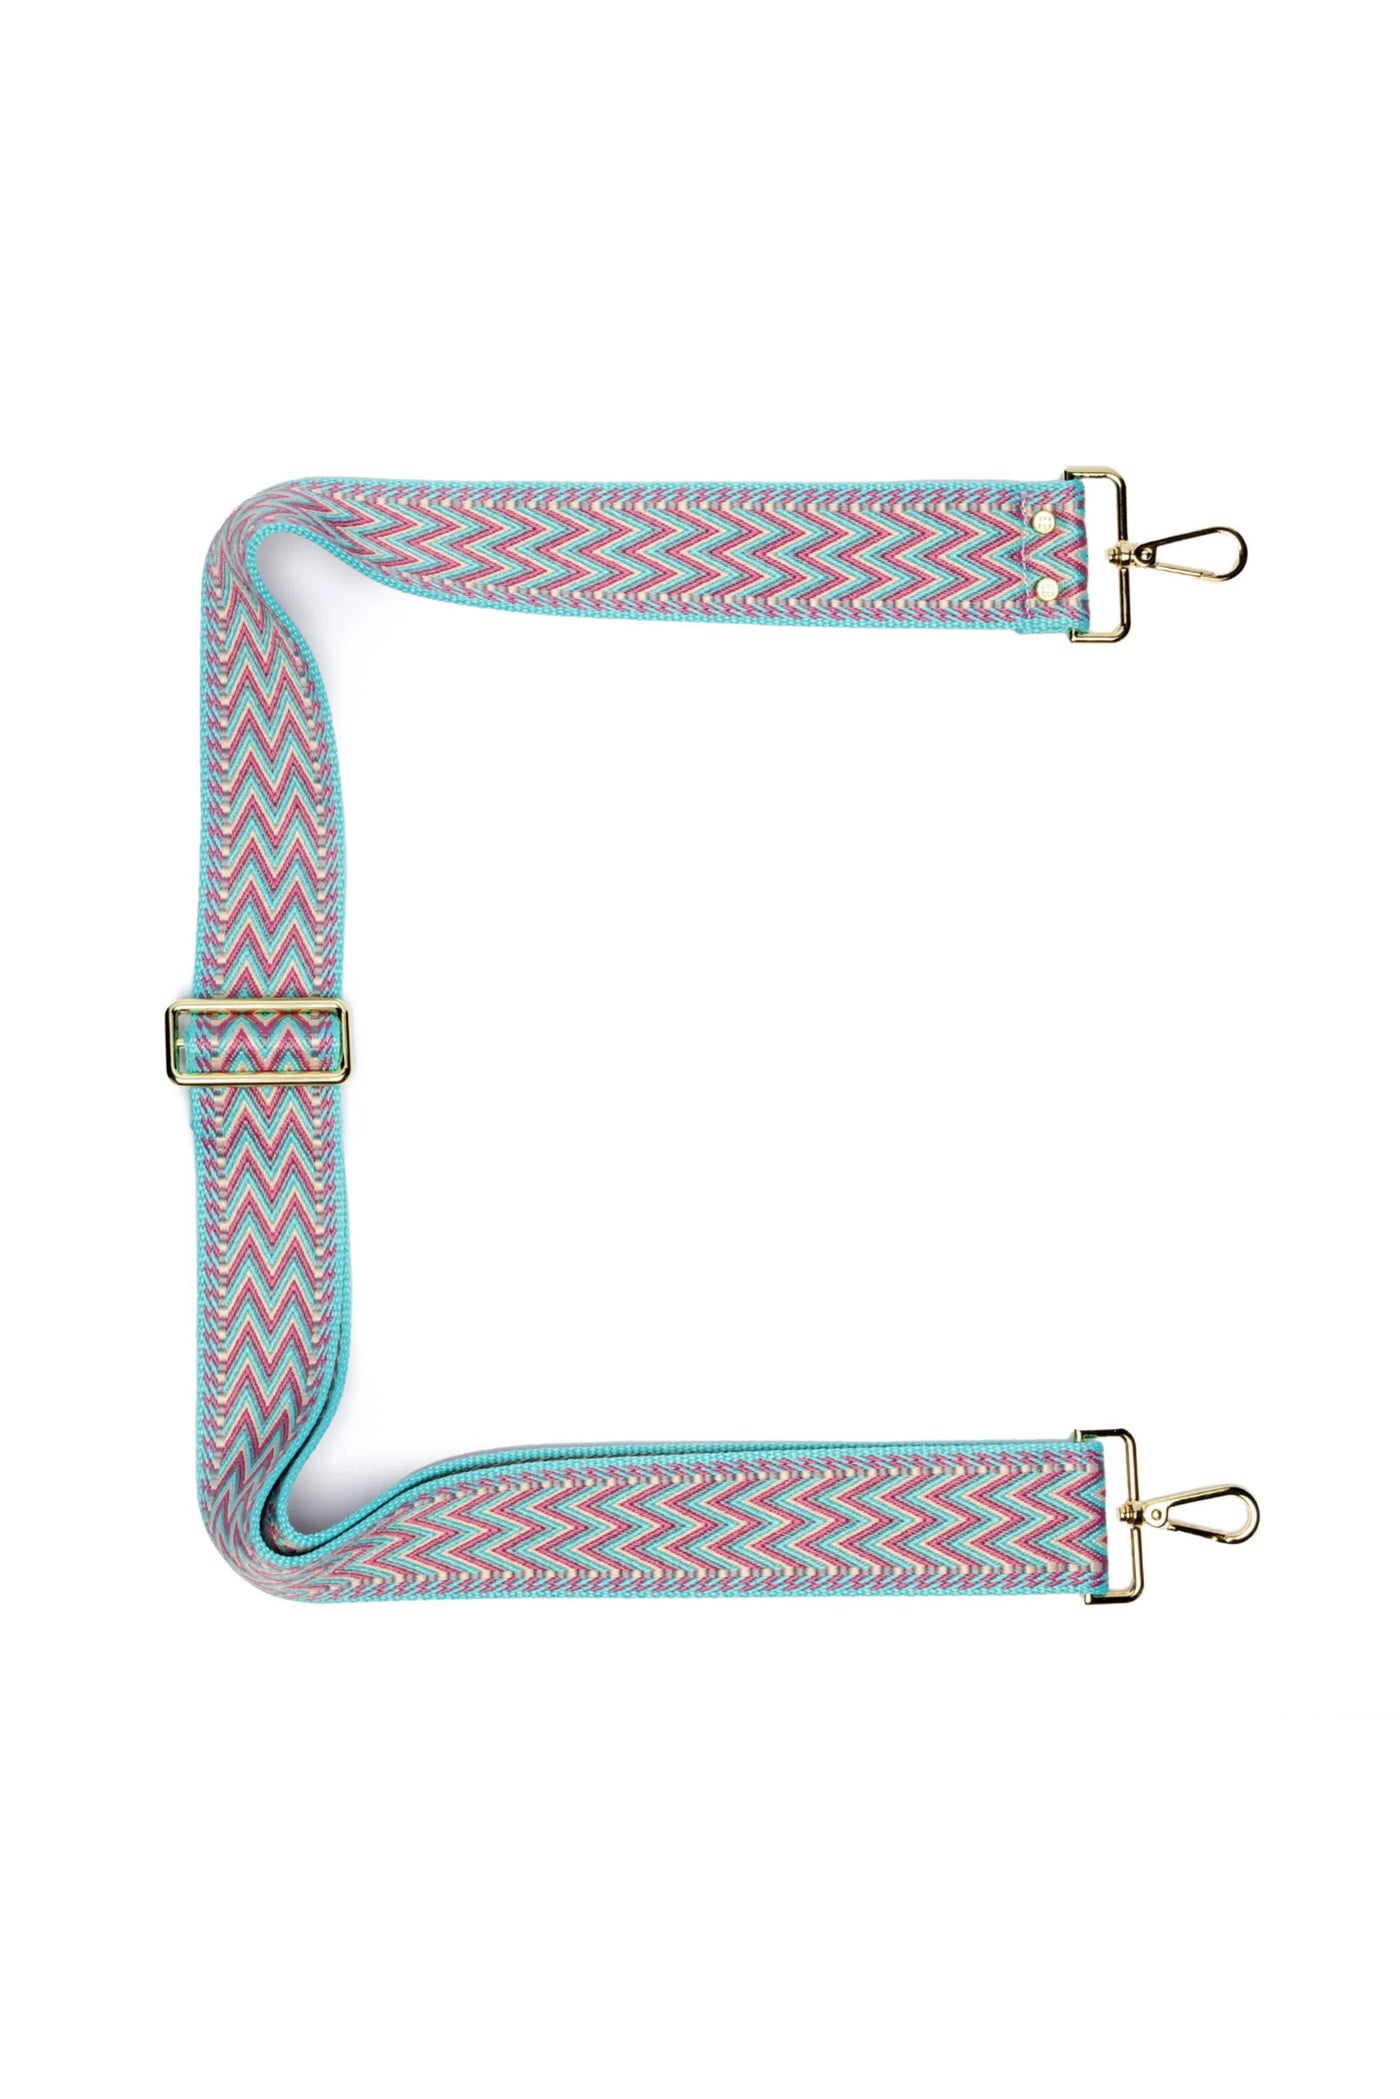 Elie Beaumont Designer AQUA GRECIAN Adjustable Crossbody Bag Strap (GOLD Fittings)